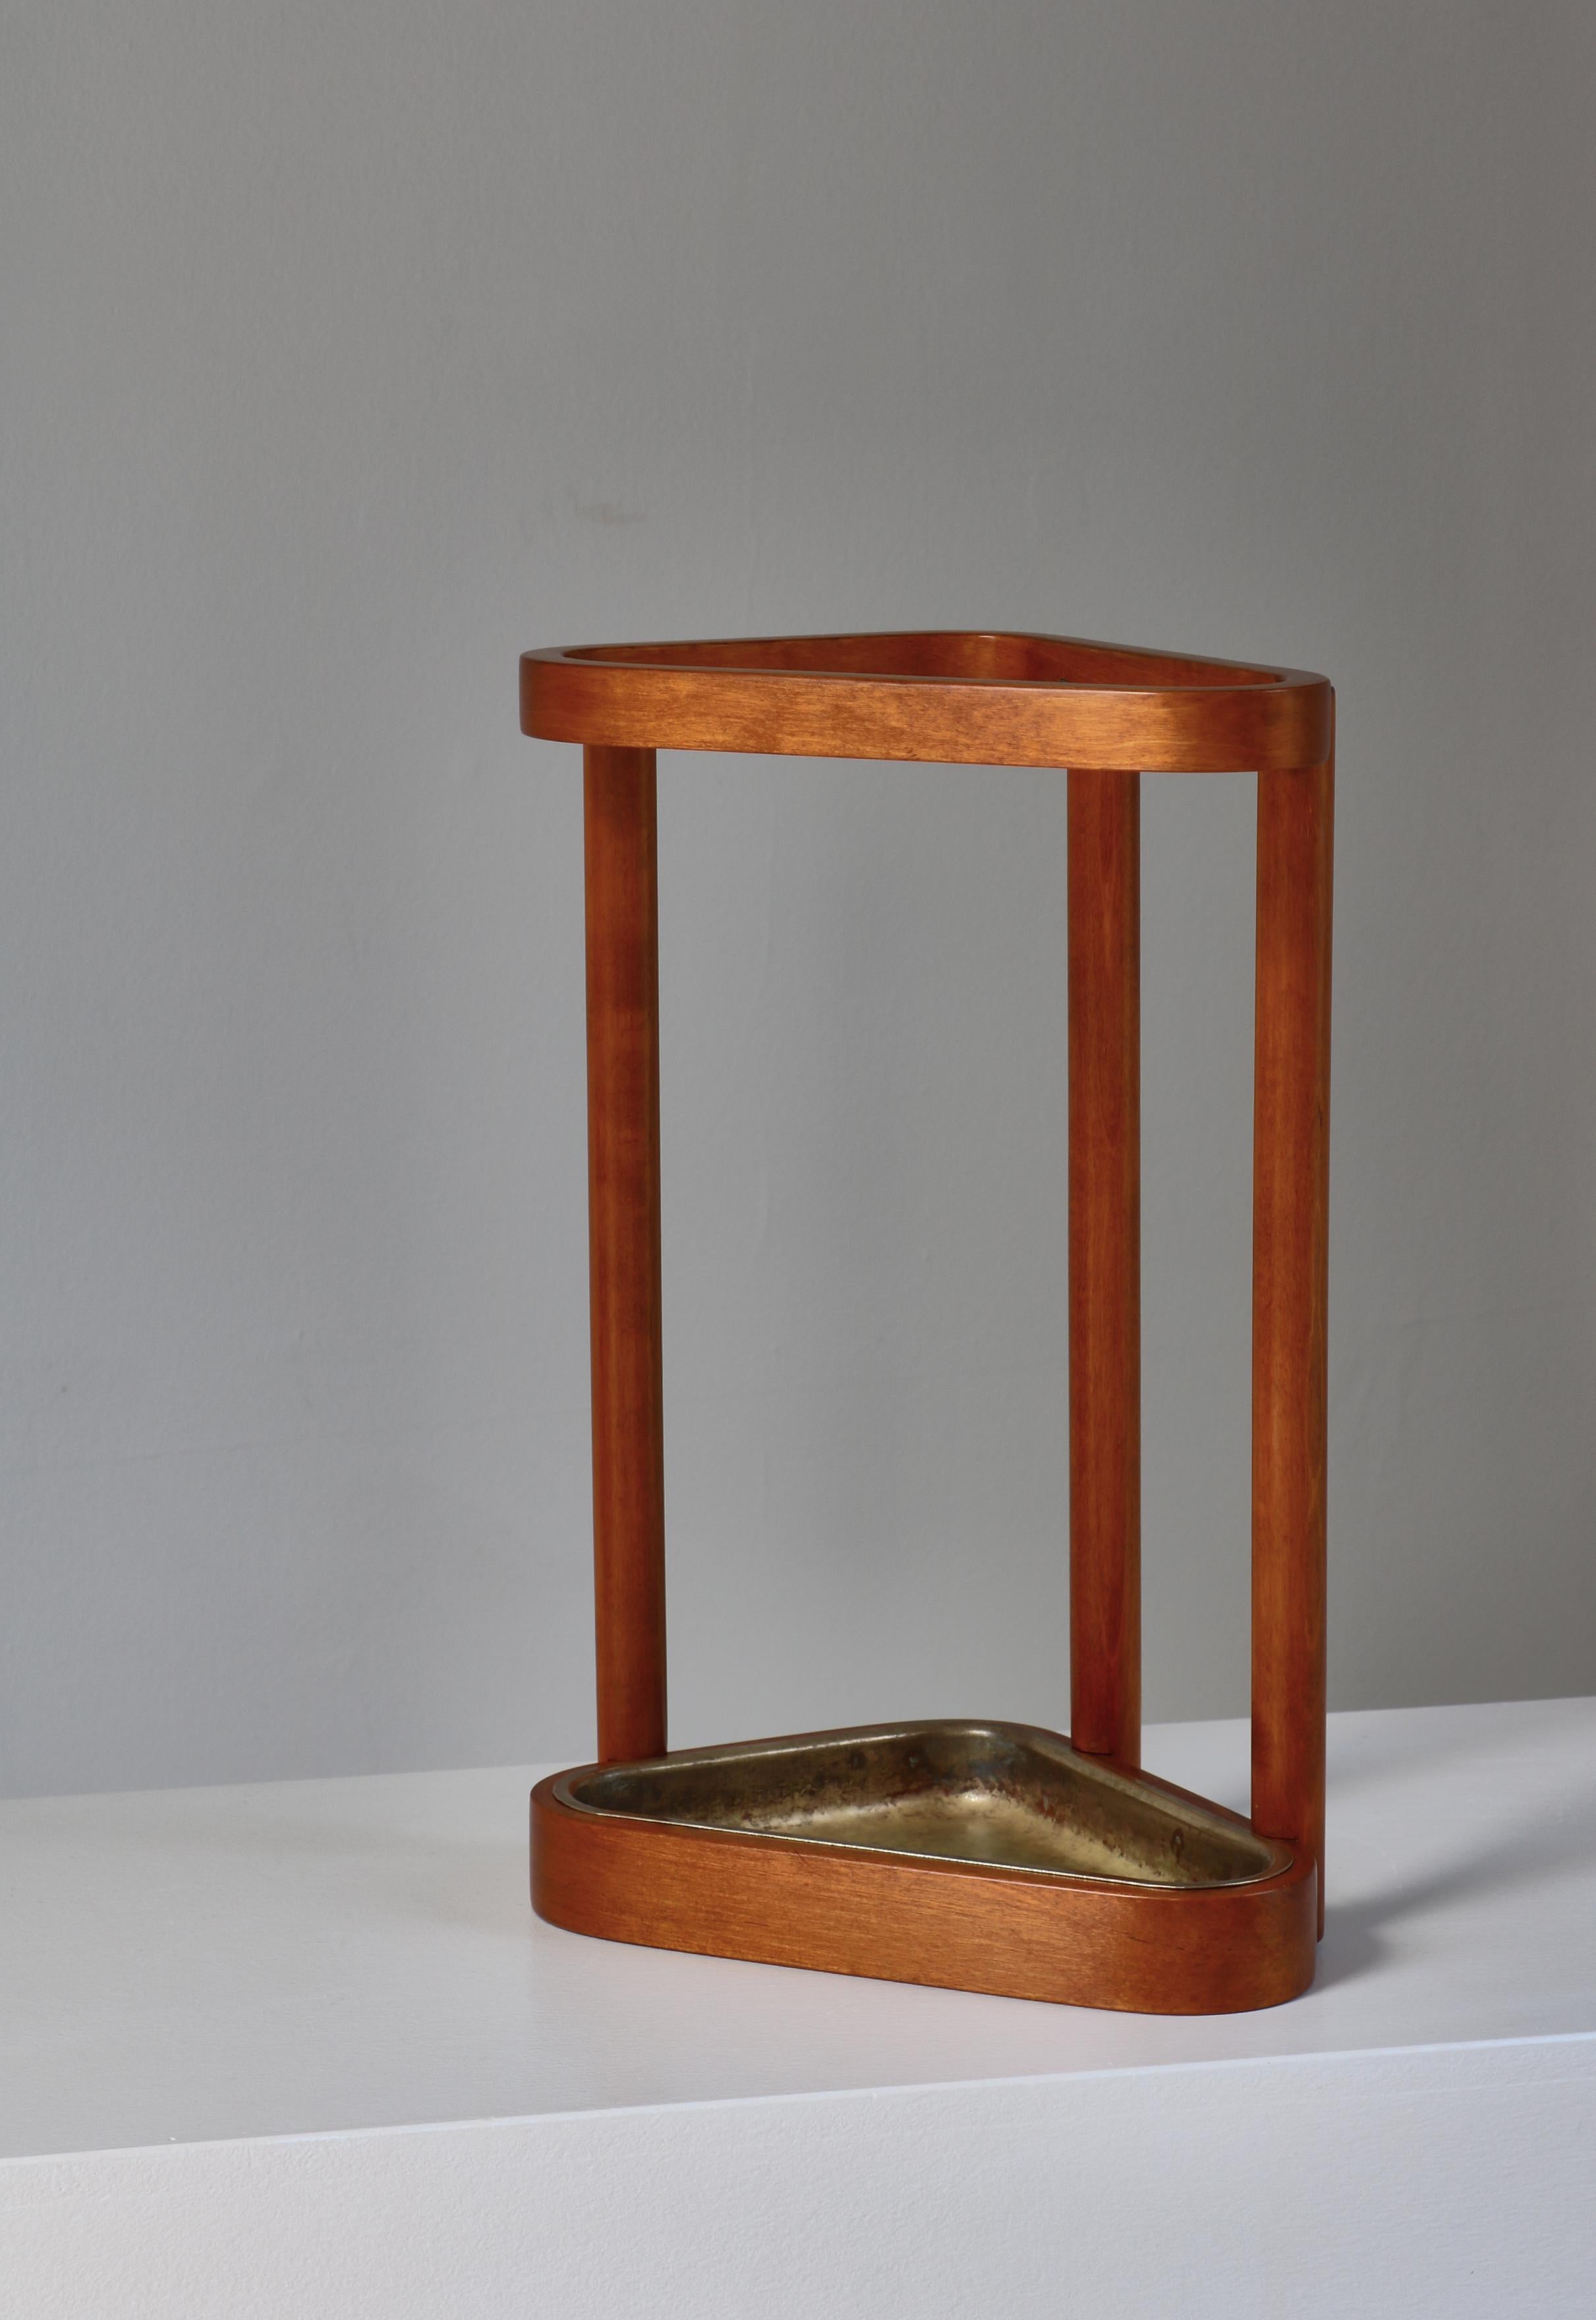 Scandinavian Modern Alvar Aalto Umbrella Stand Model no. 115 Birch & Brass 1940s For Sale 2